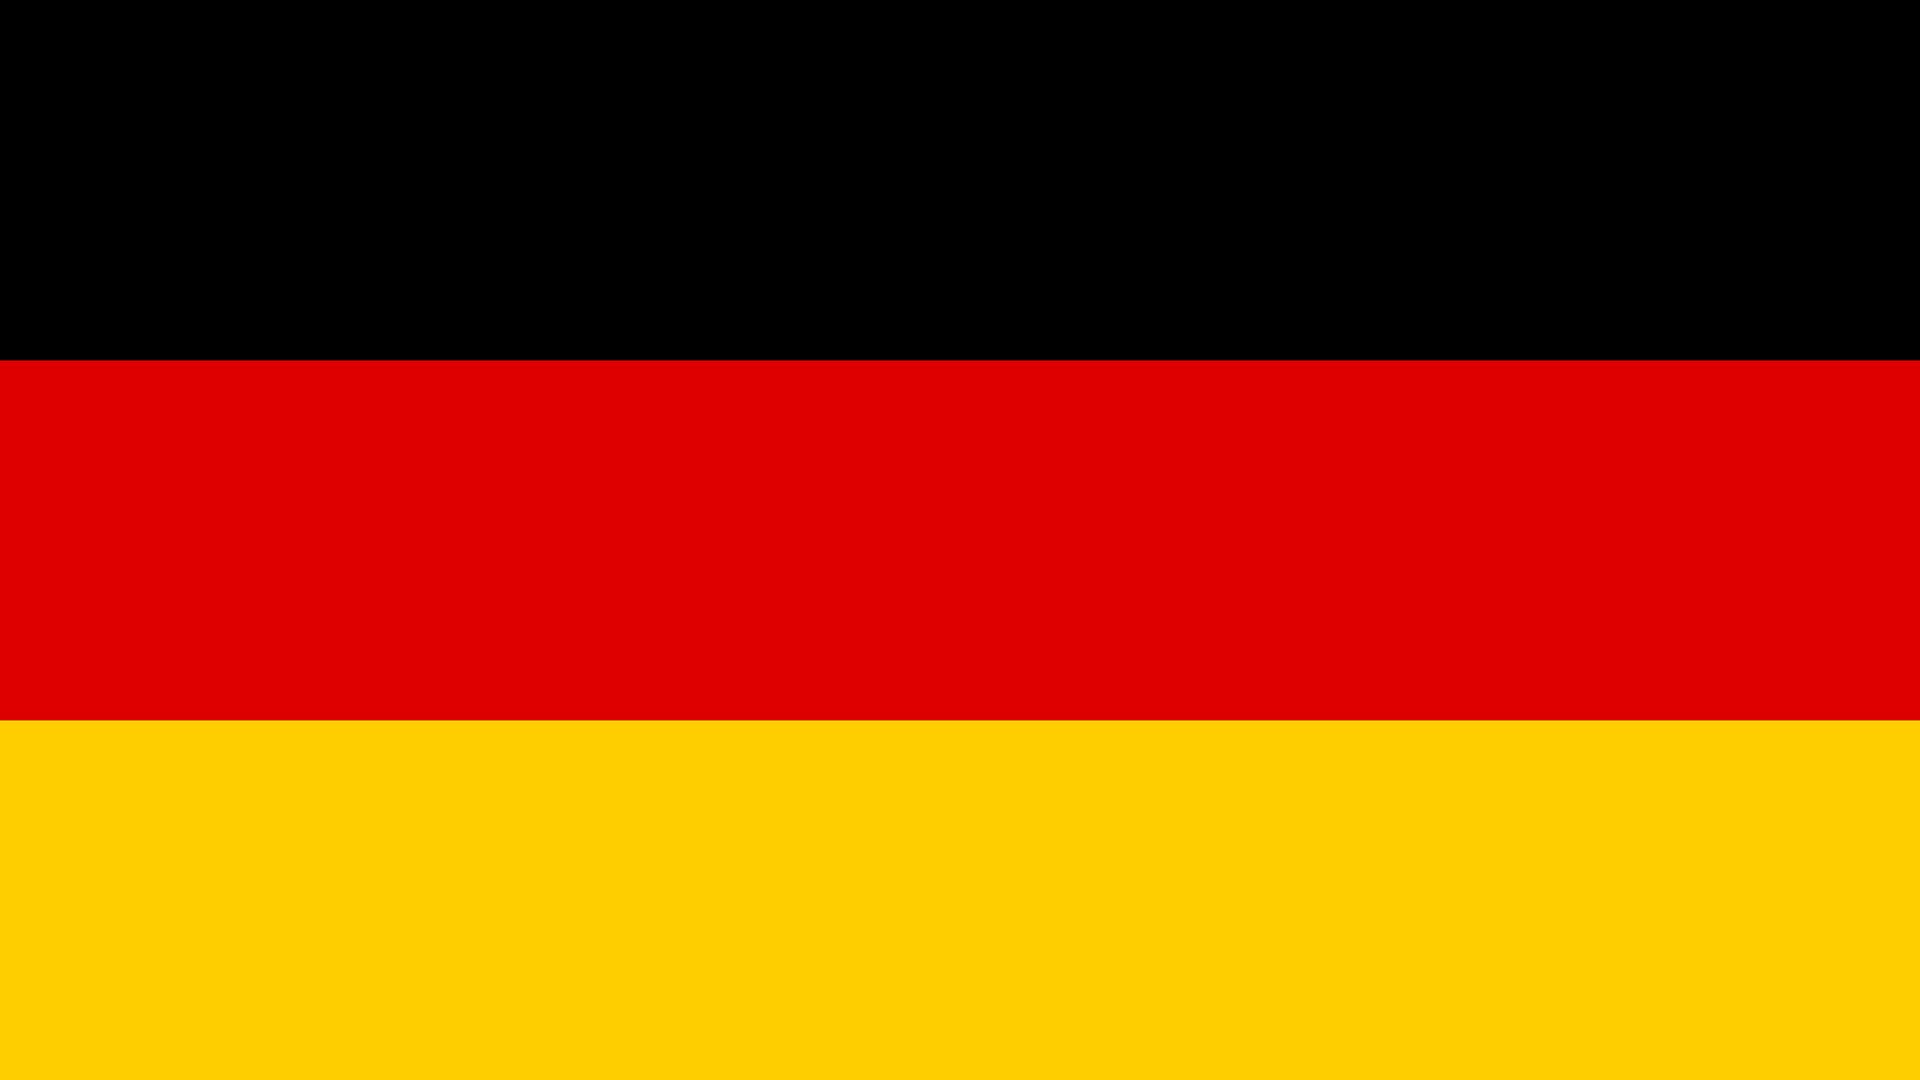 Germany1 - Страны мира